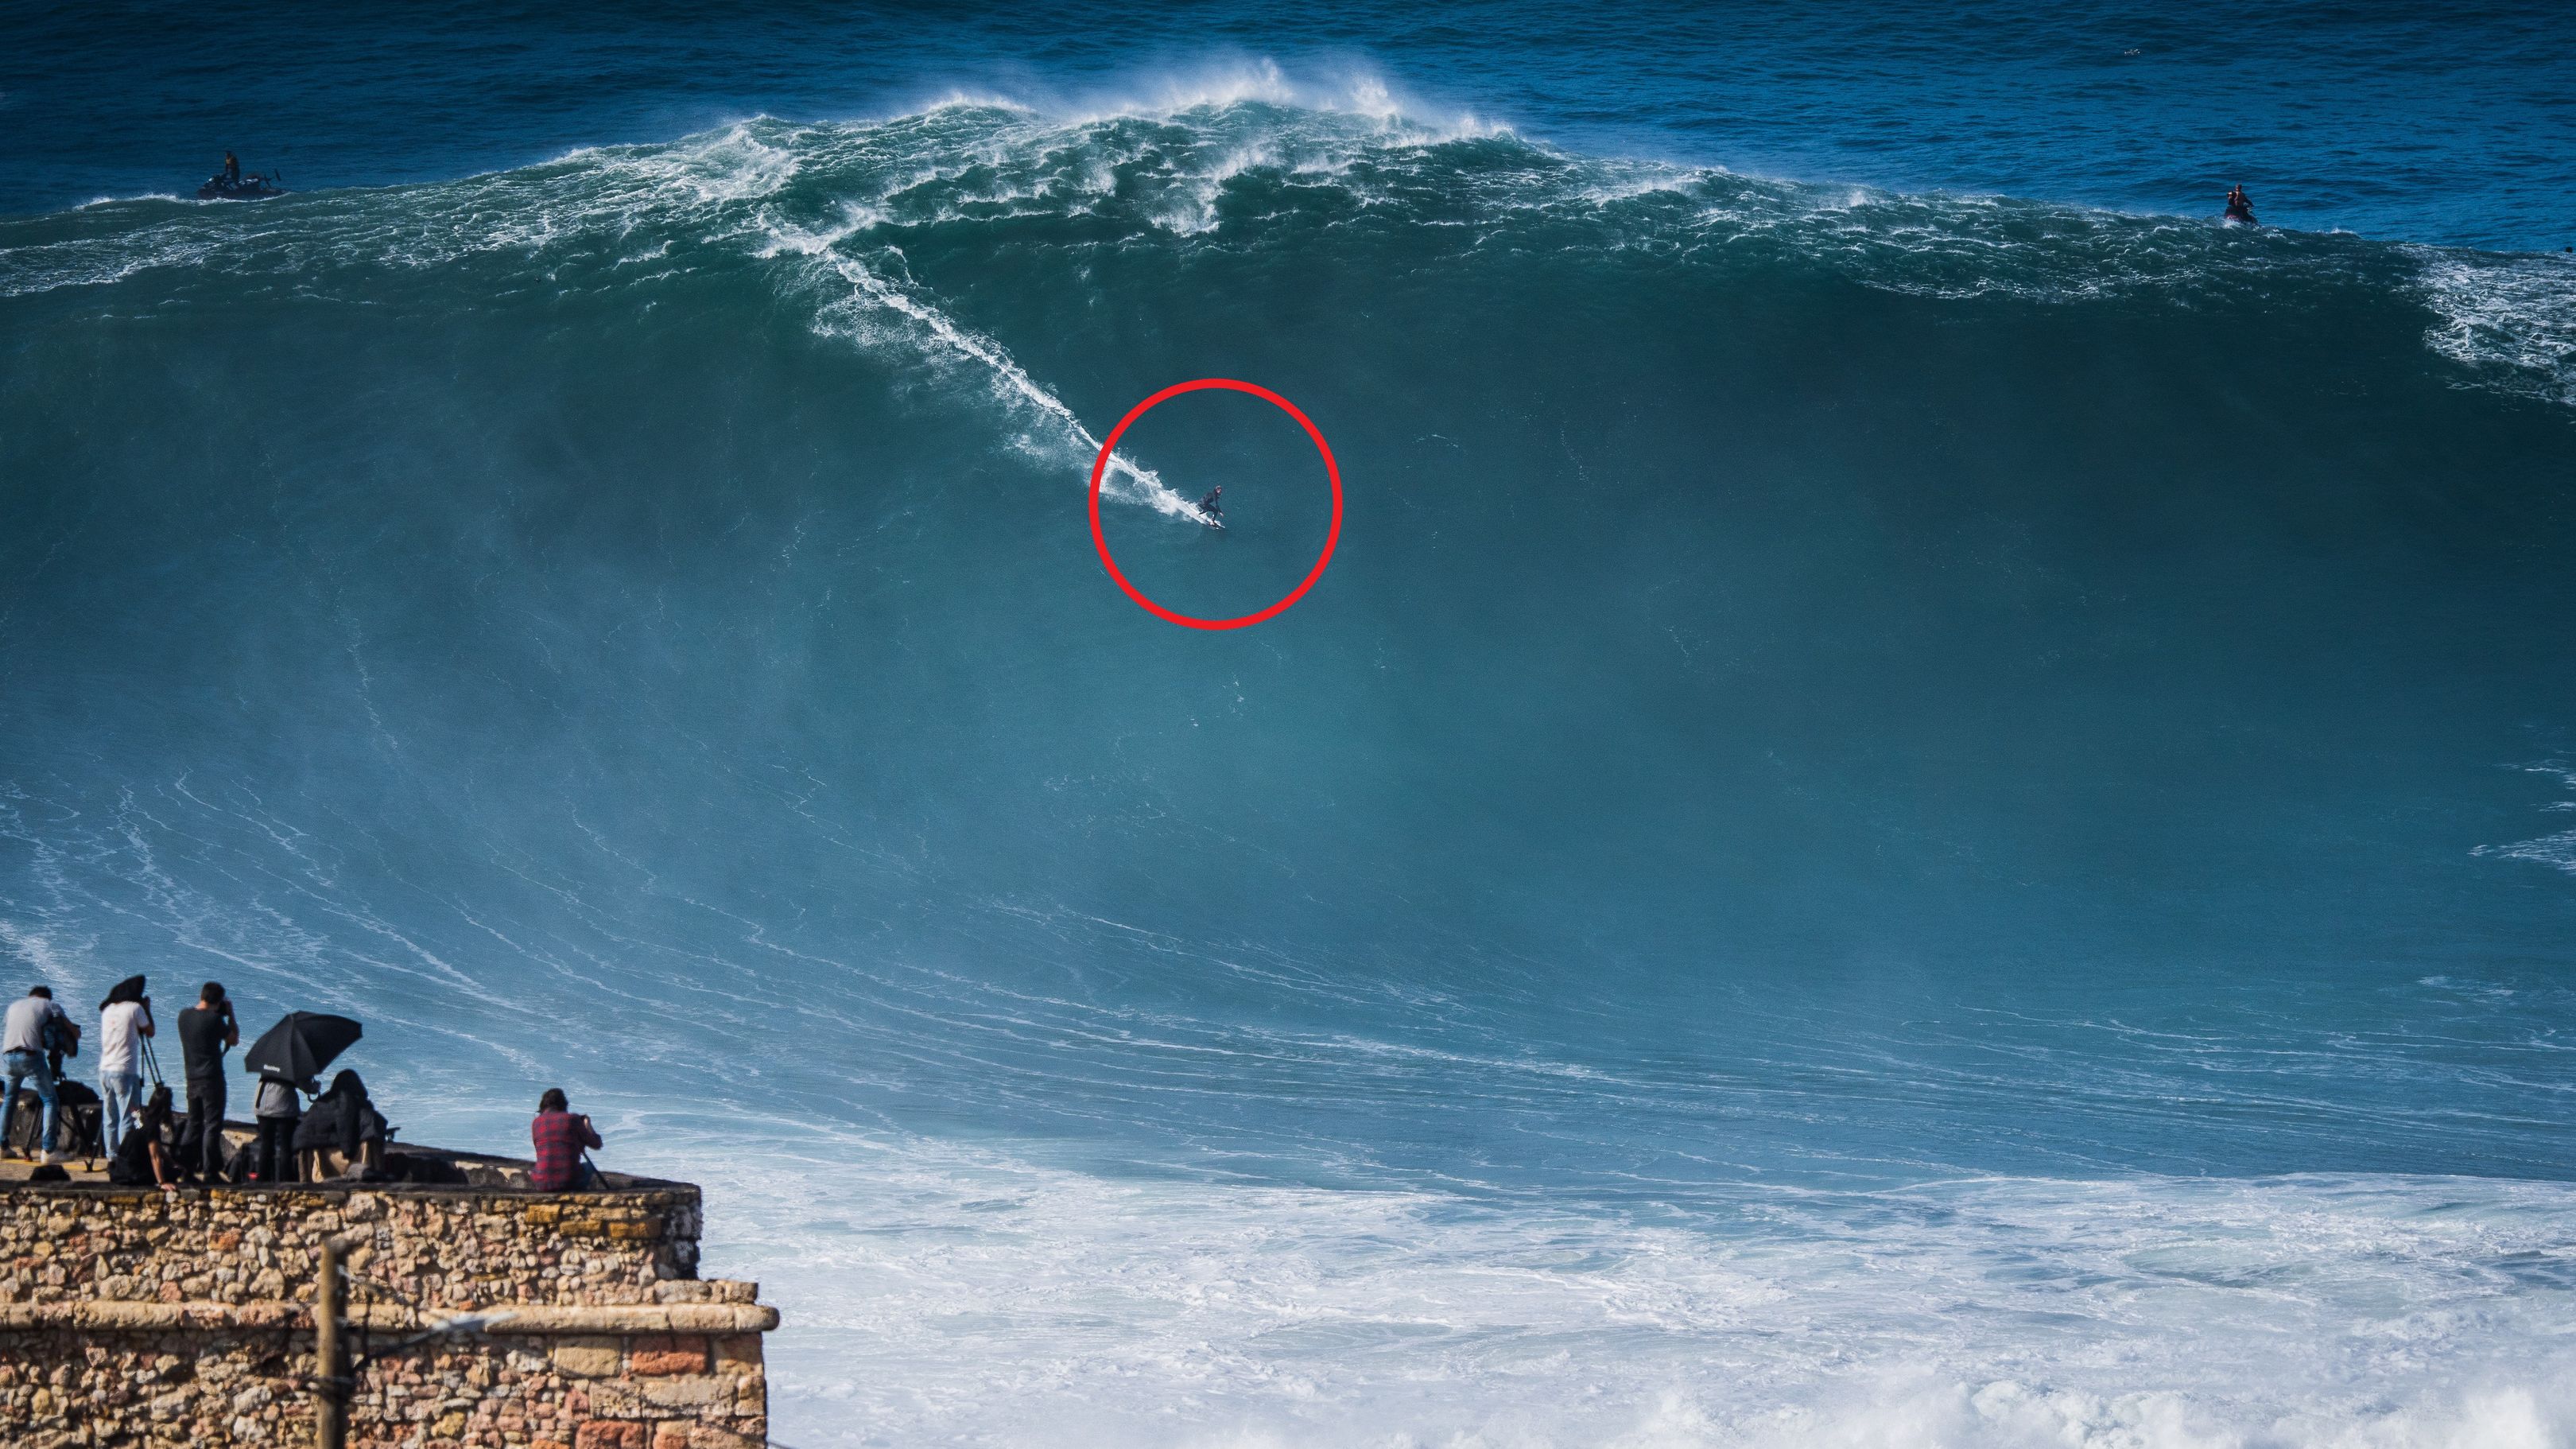 Sebastian Steudtner rides a monster wave at Nazare in Portugal in 2020.